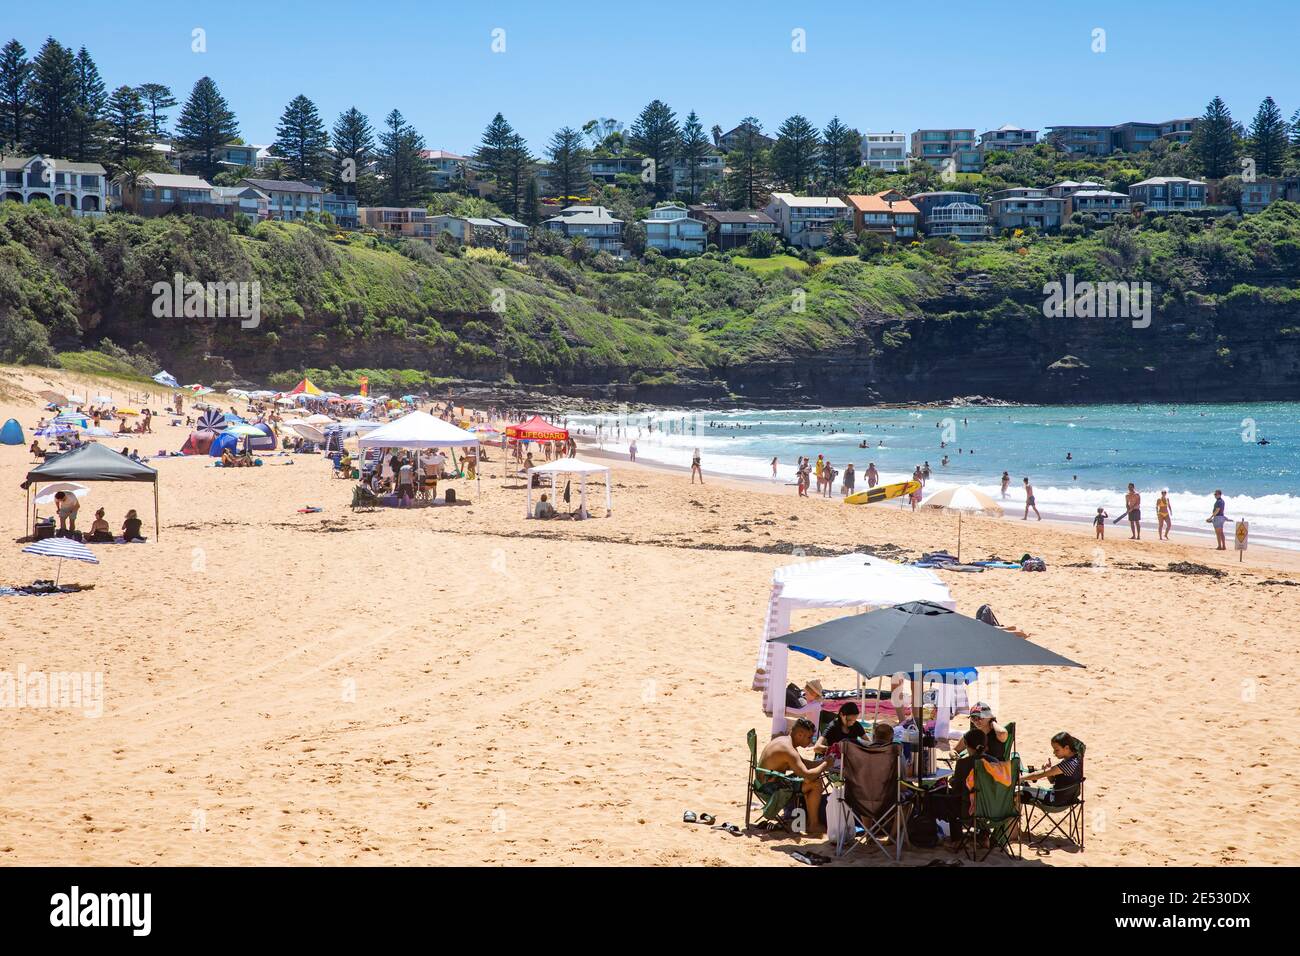 Sunbathing on Bilgola Beach Sydney during hot australian summer and utilising cabanas and umbrellas to provide sun protection and shade,Sydney Stock Photo